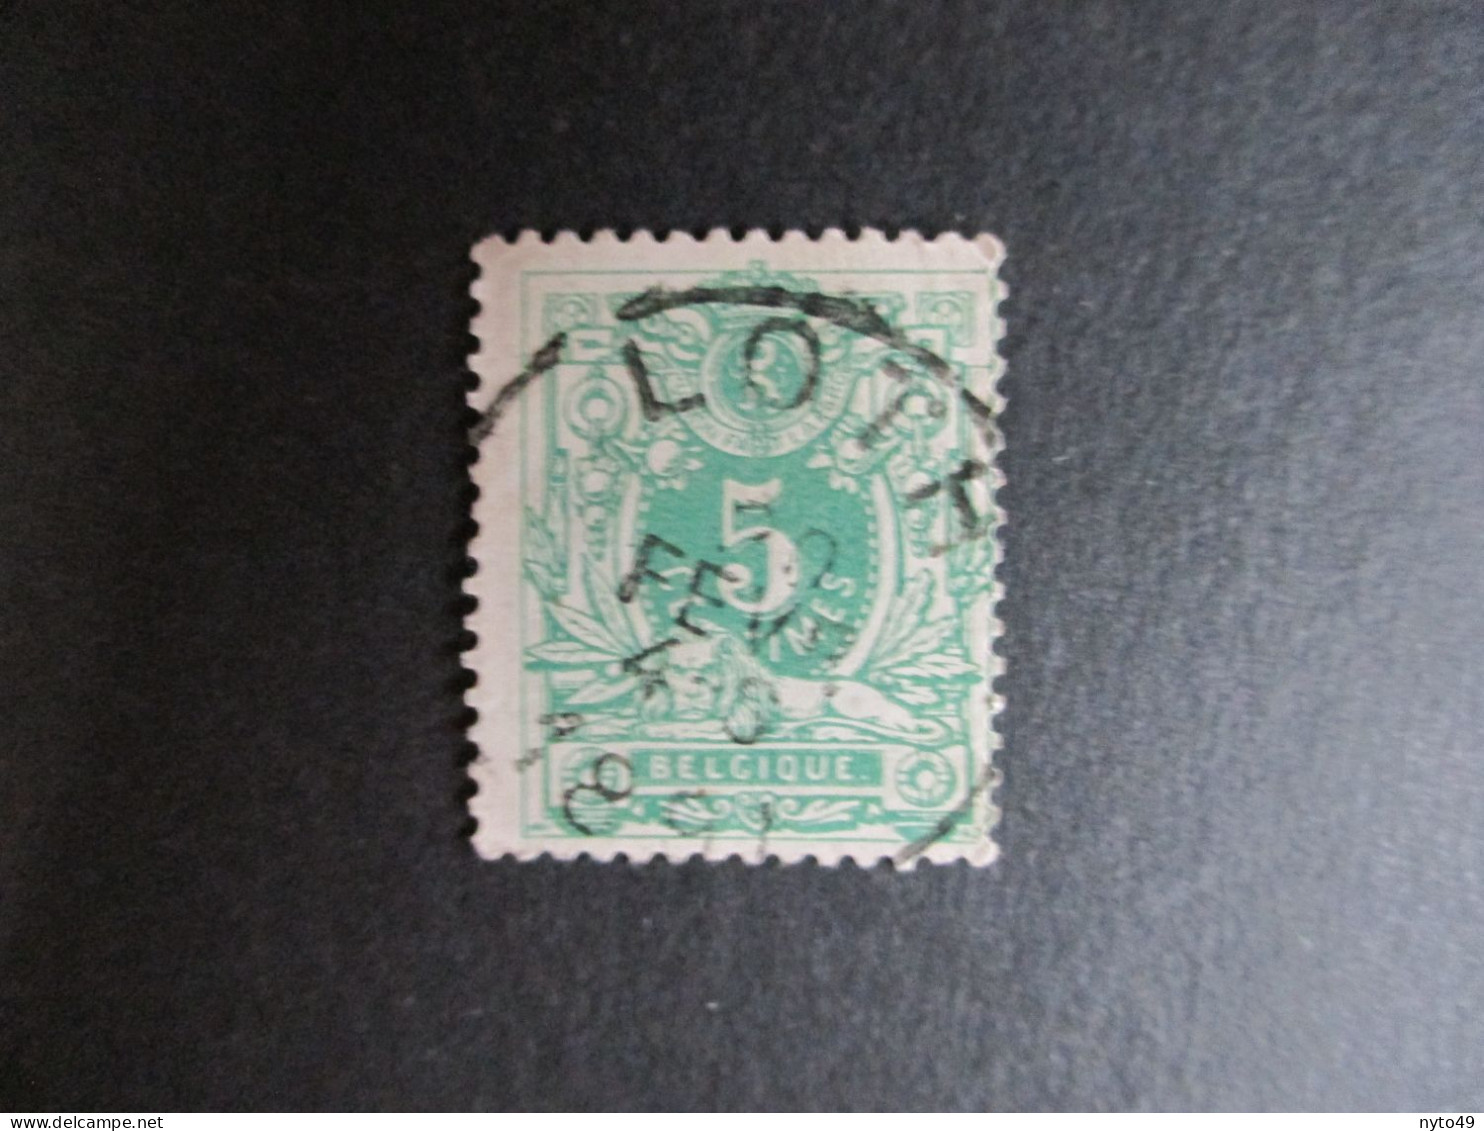 Nr 45 - Centrale Stempel "Loth" - Coba + 4 - 1869-1888 Lying Lion